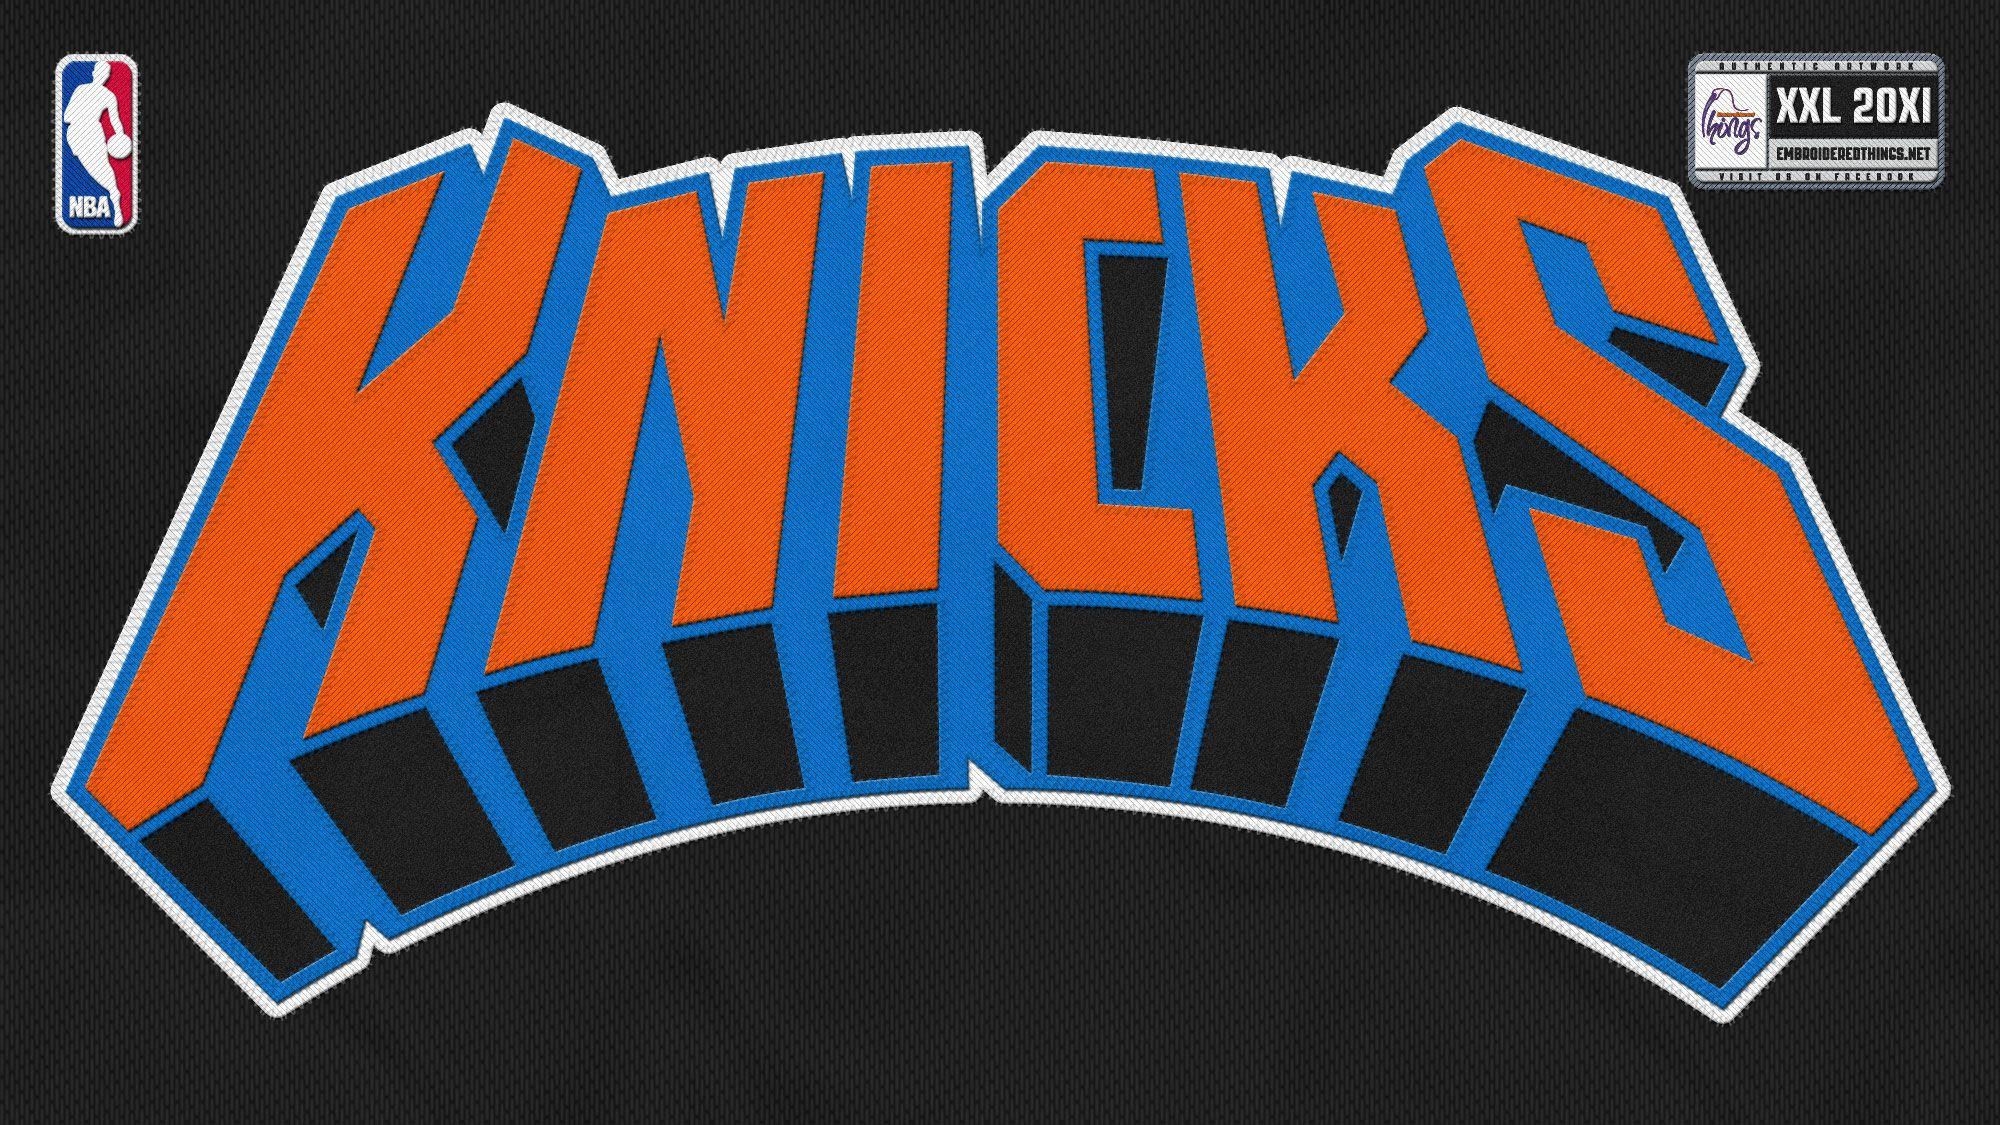 New York Knicks rumors